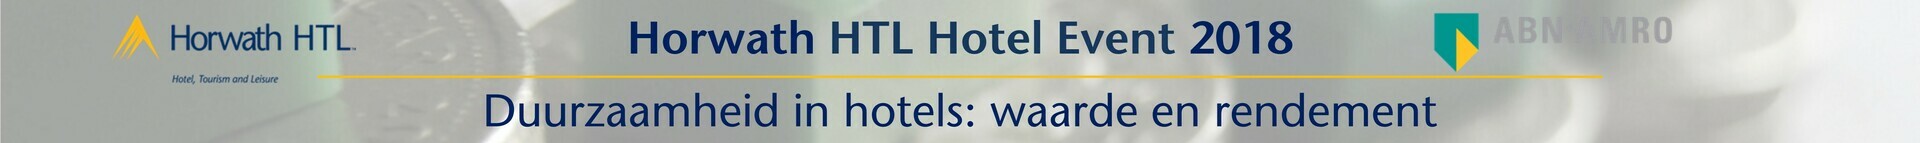 Horwath HTL Hotel Event 2018